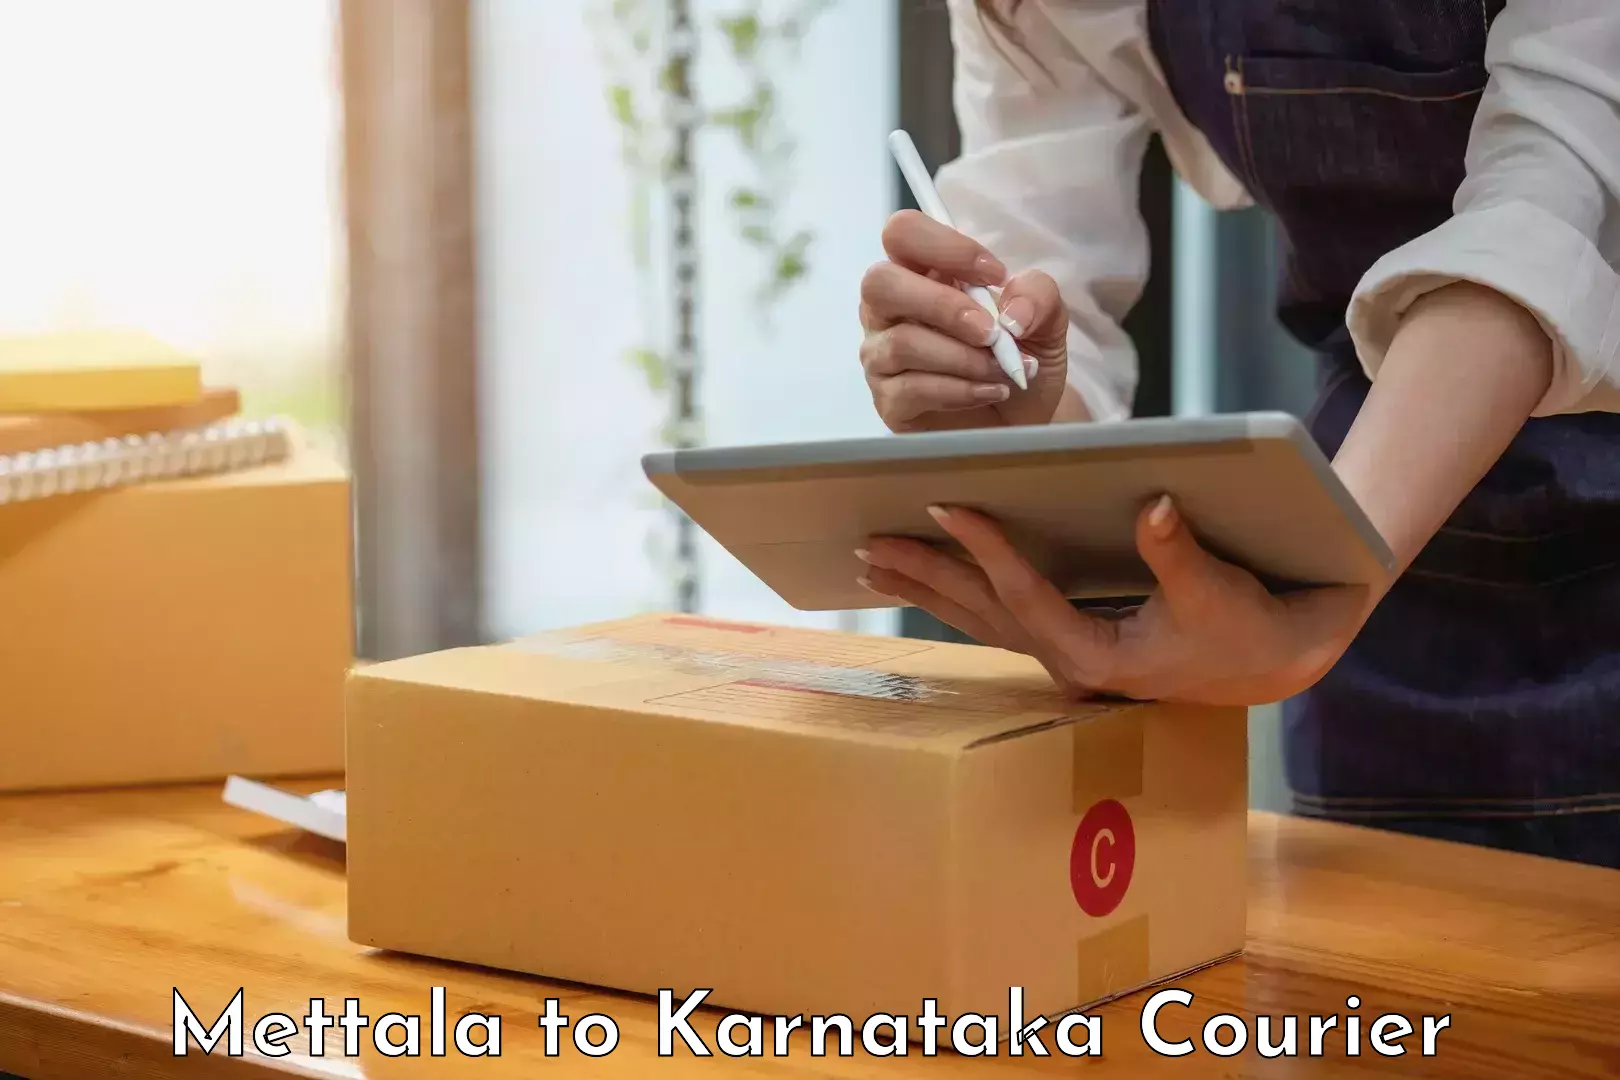 Cash on delivery service Mettala to Karnataka